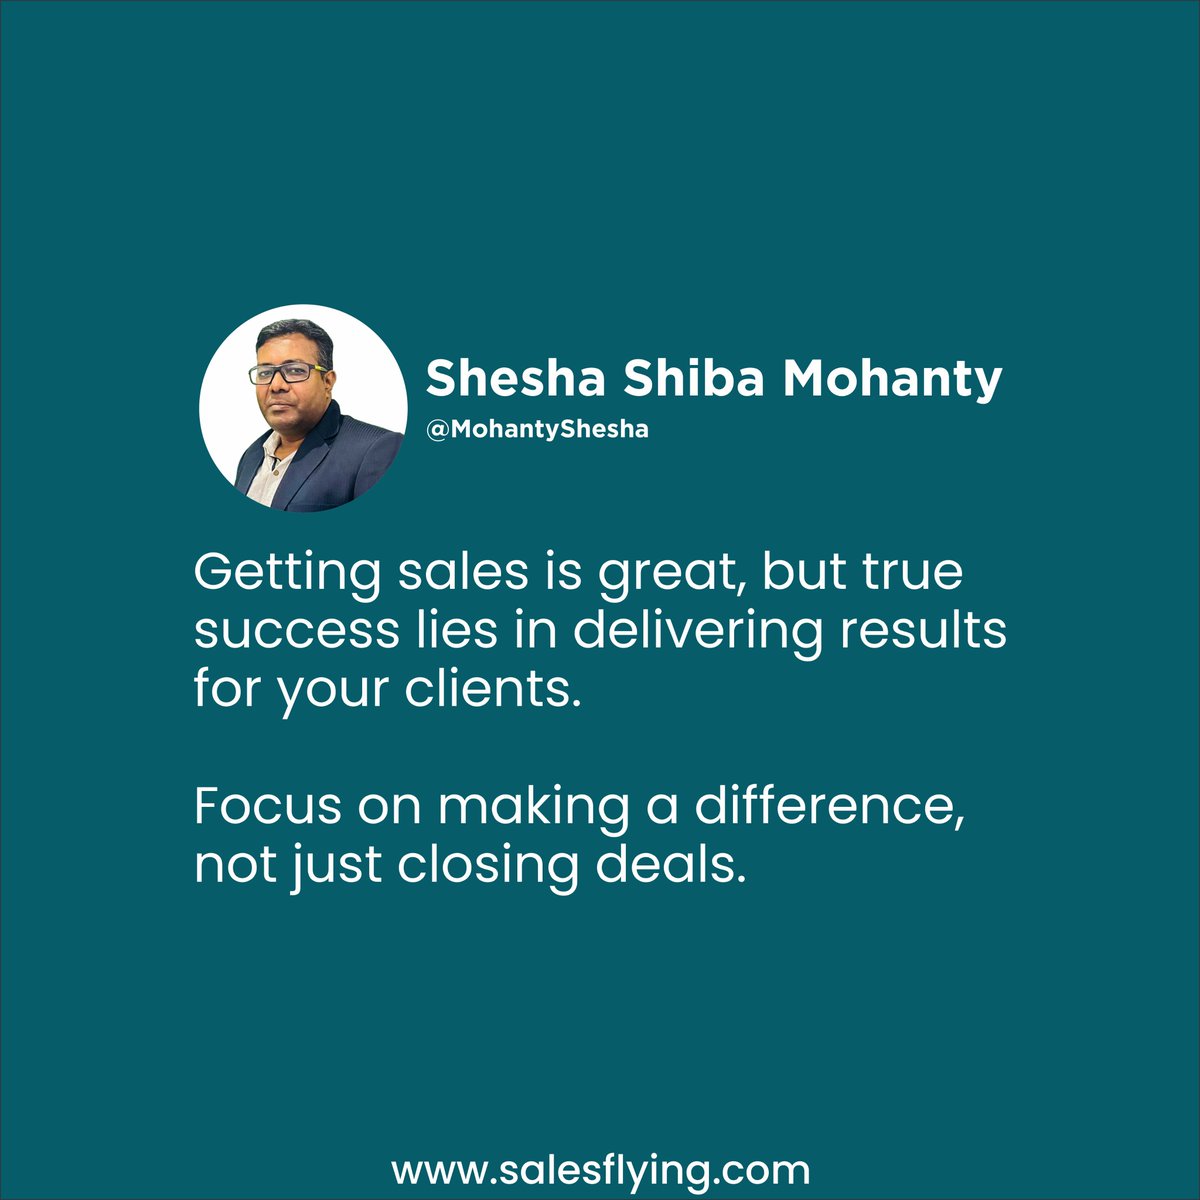 At the end results matters. !

#sheshamohanty #sales #deliveringresults #businesscoach #salescoach #businessguide